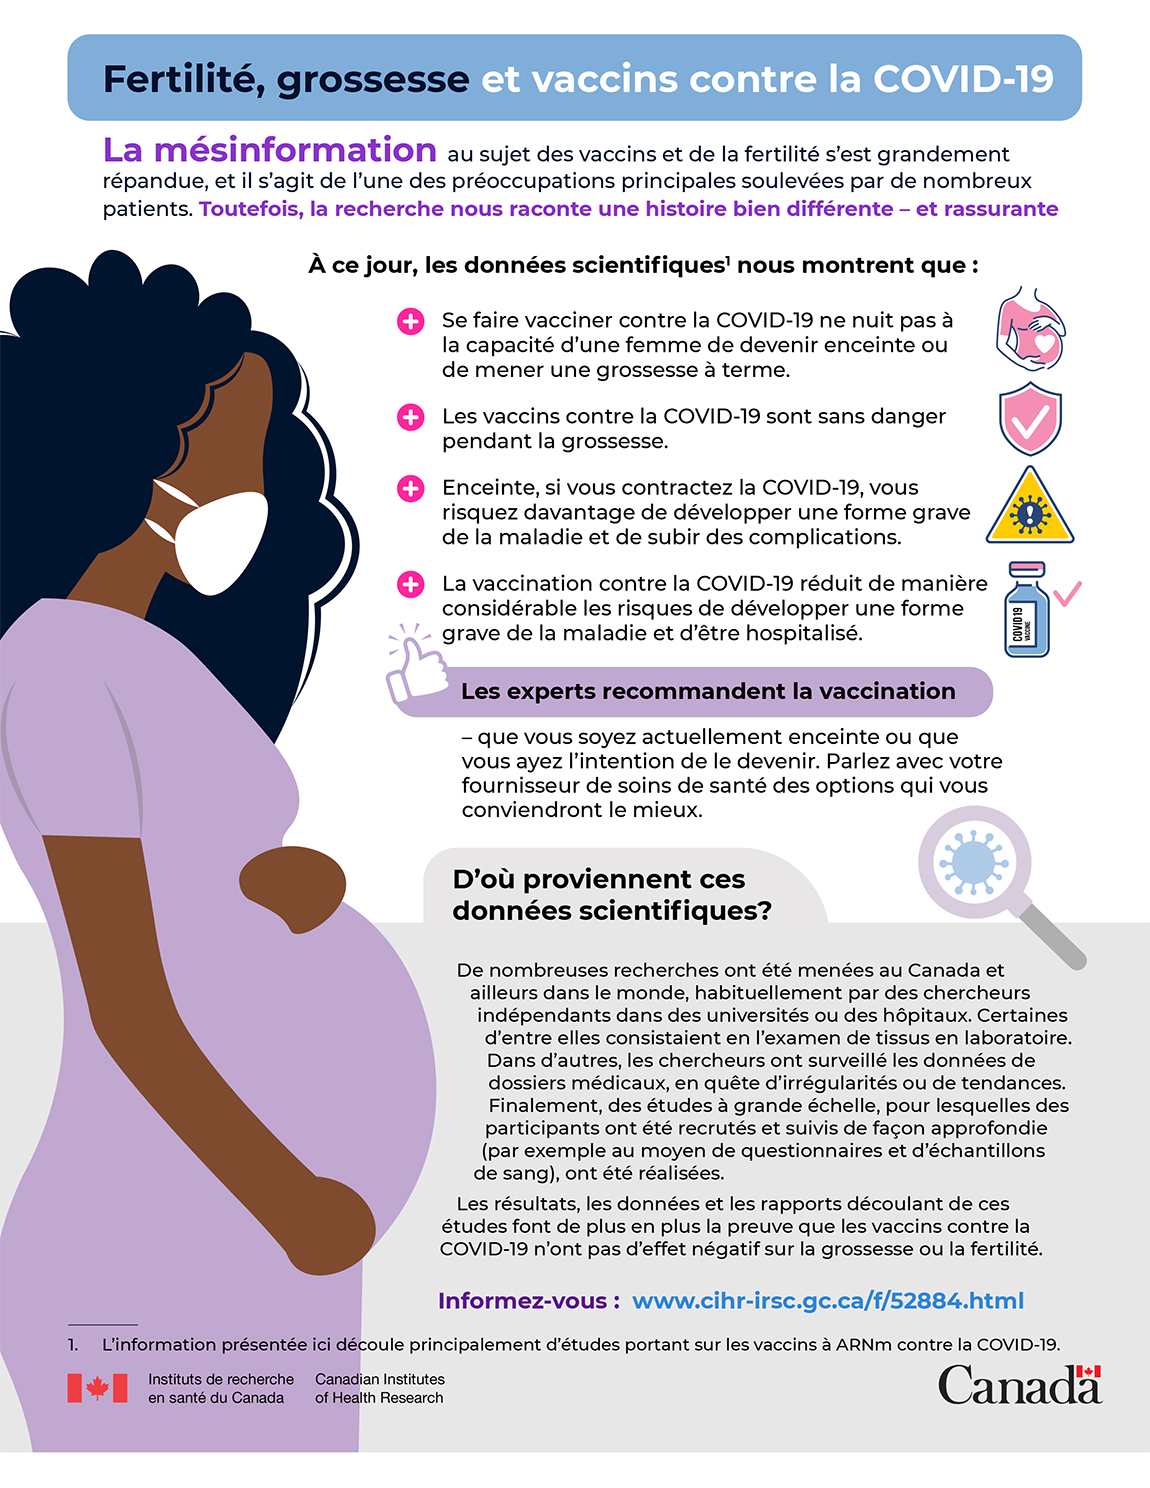 Infographic: Fertility, pregnancy & COVID-19 vaccines